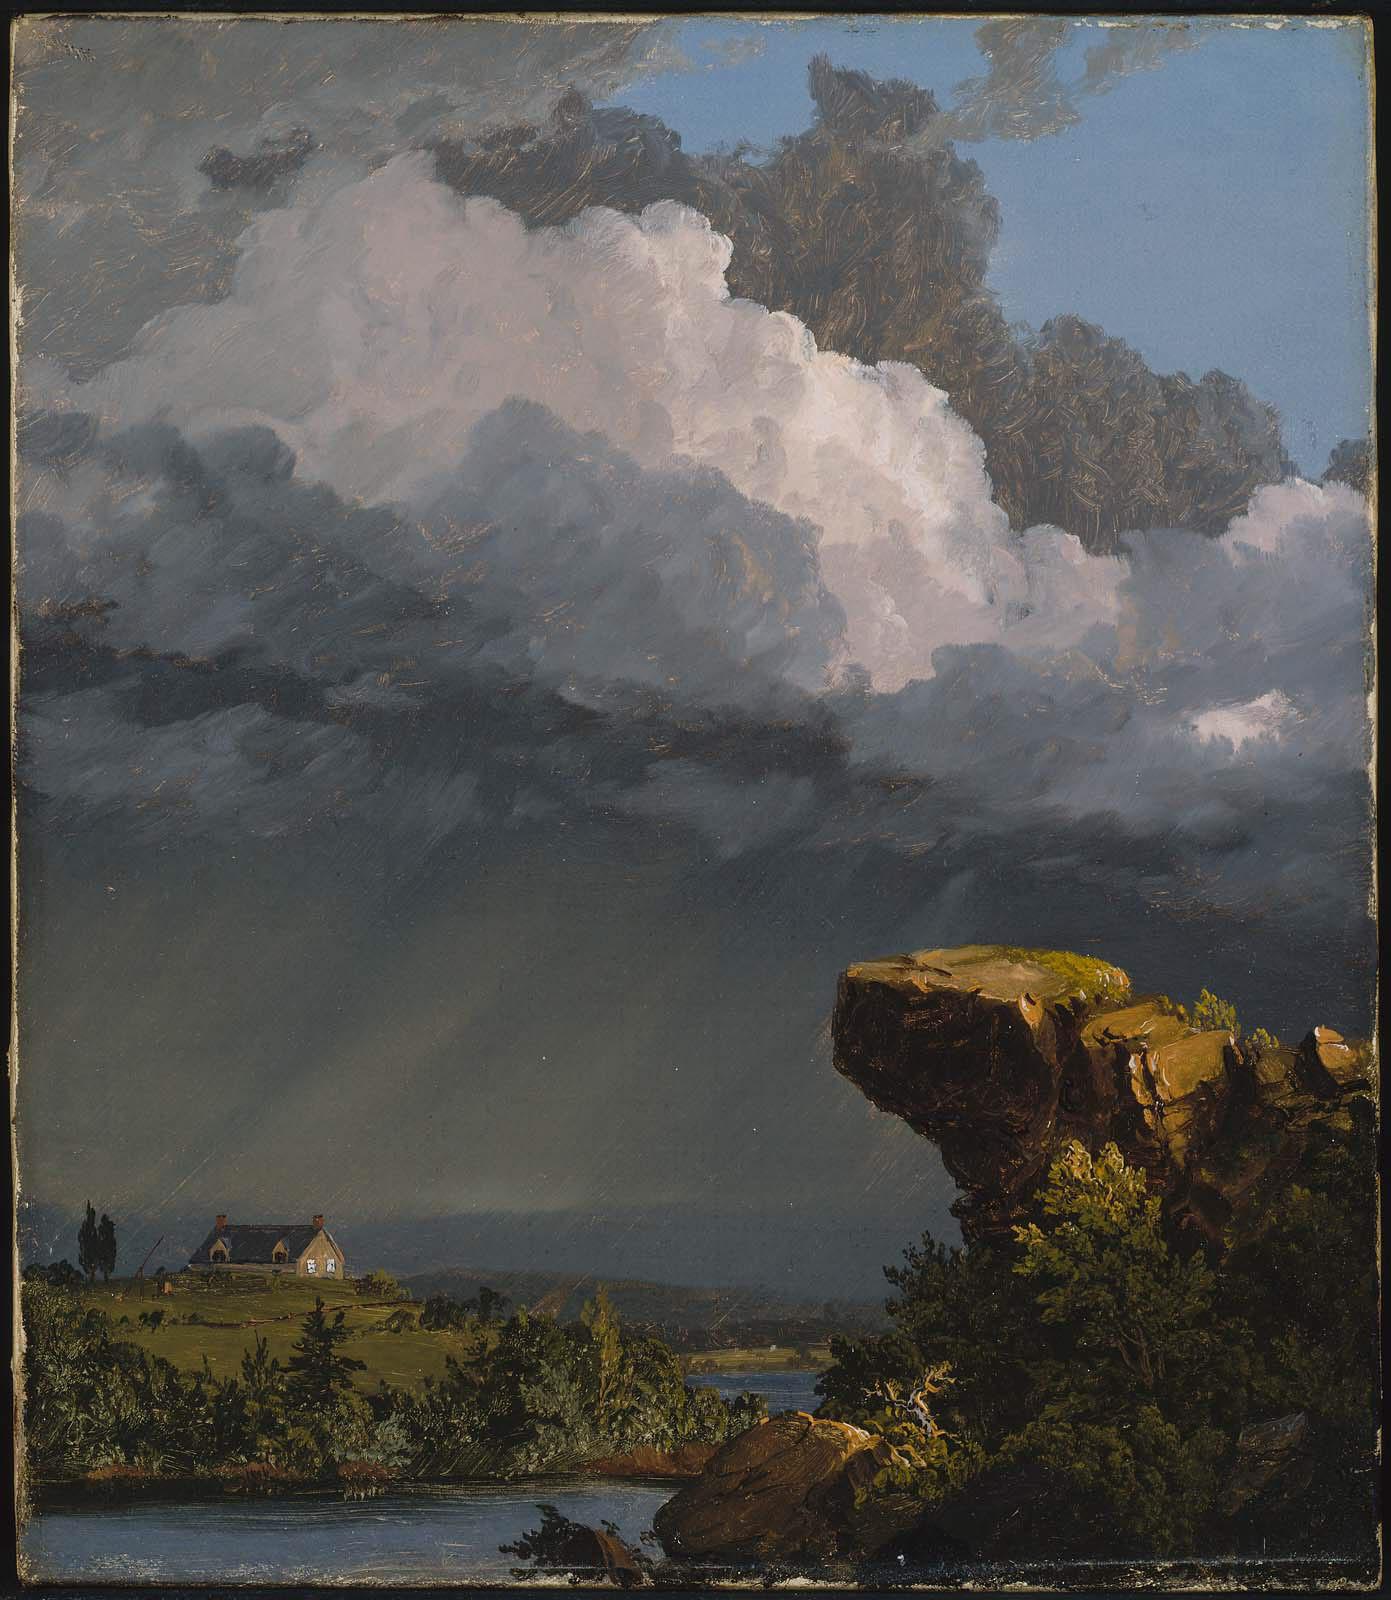 Ein Vorüberziehender Sturm by Frederic Edwin Church - 1849 - 35.88 x 30.48 cm Museum of Fine Arts Boston